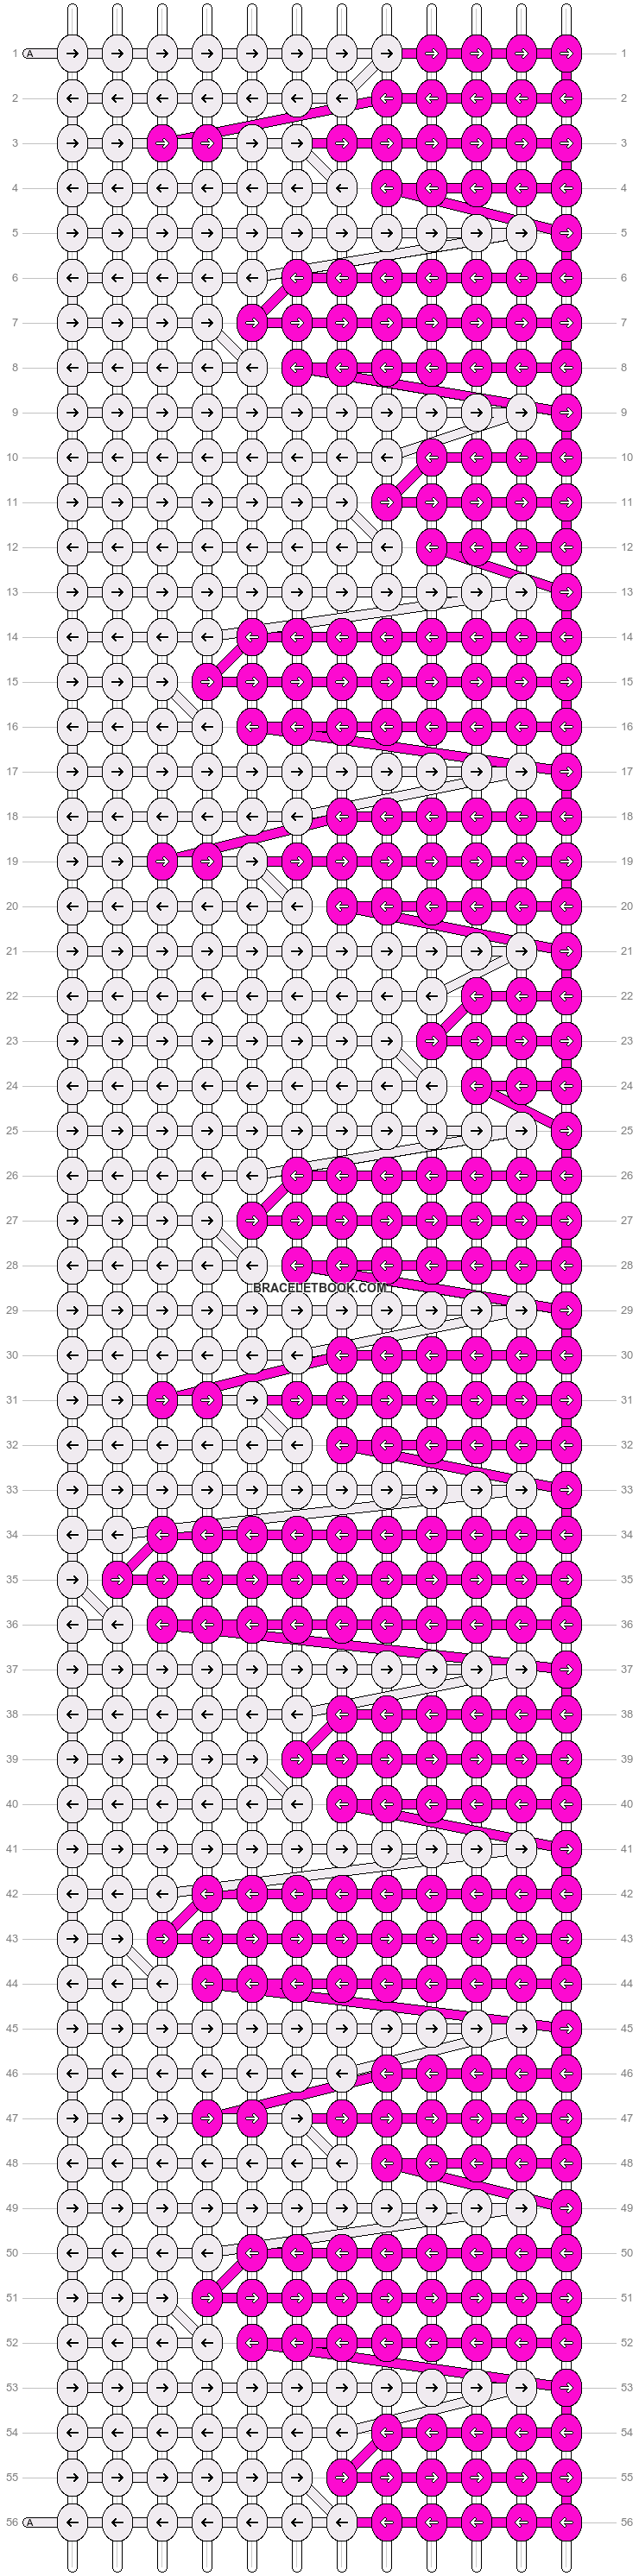 Alpha pattern #64518 pattern